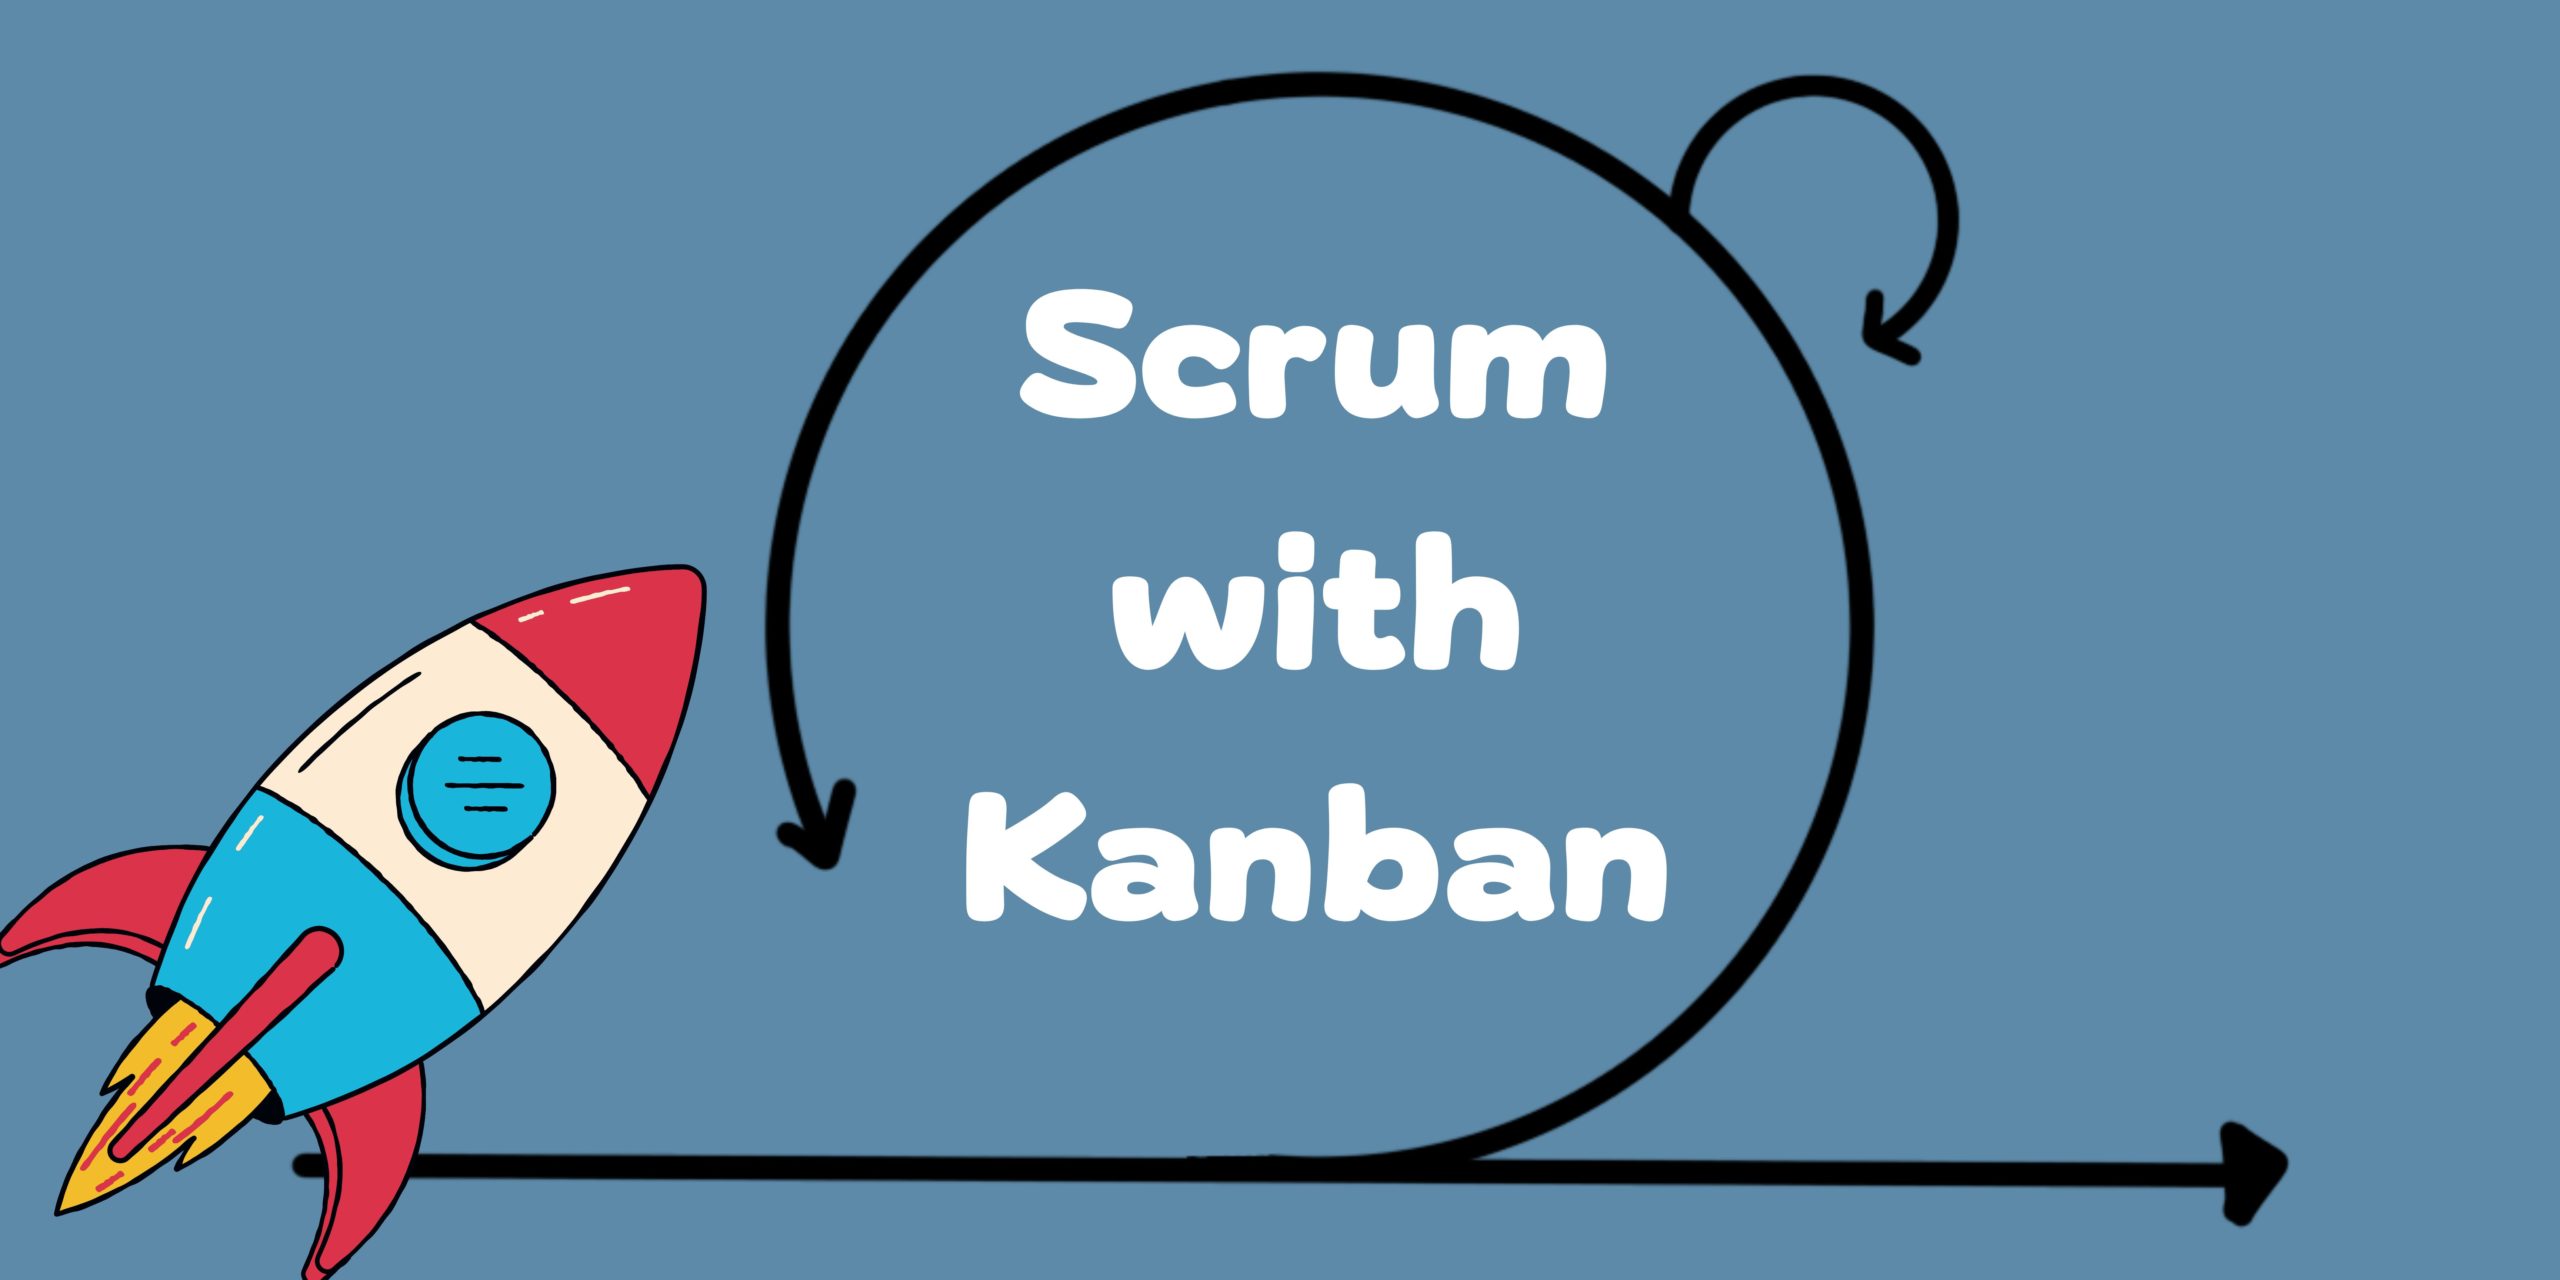 Scrum with Kanban